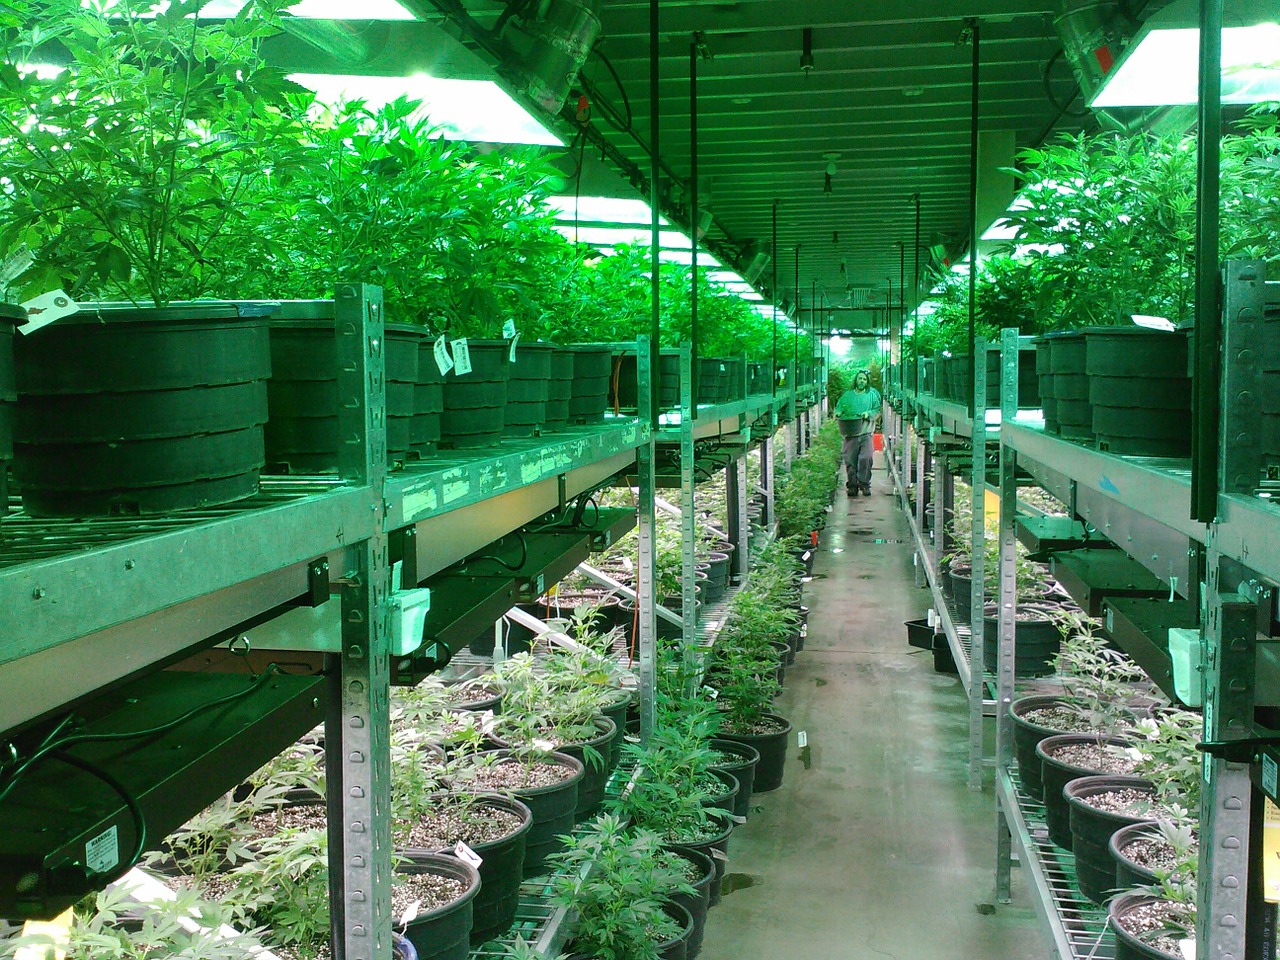 Illinois legalizes recreational marijuana